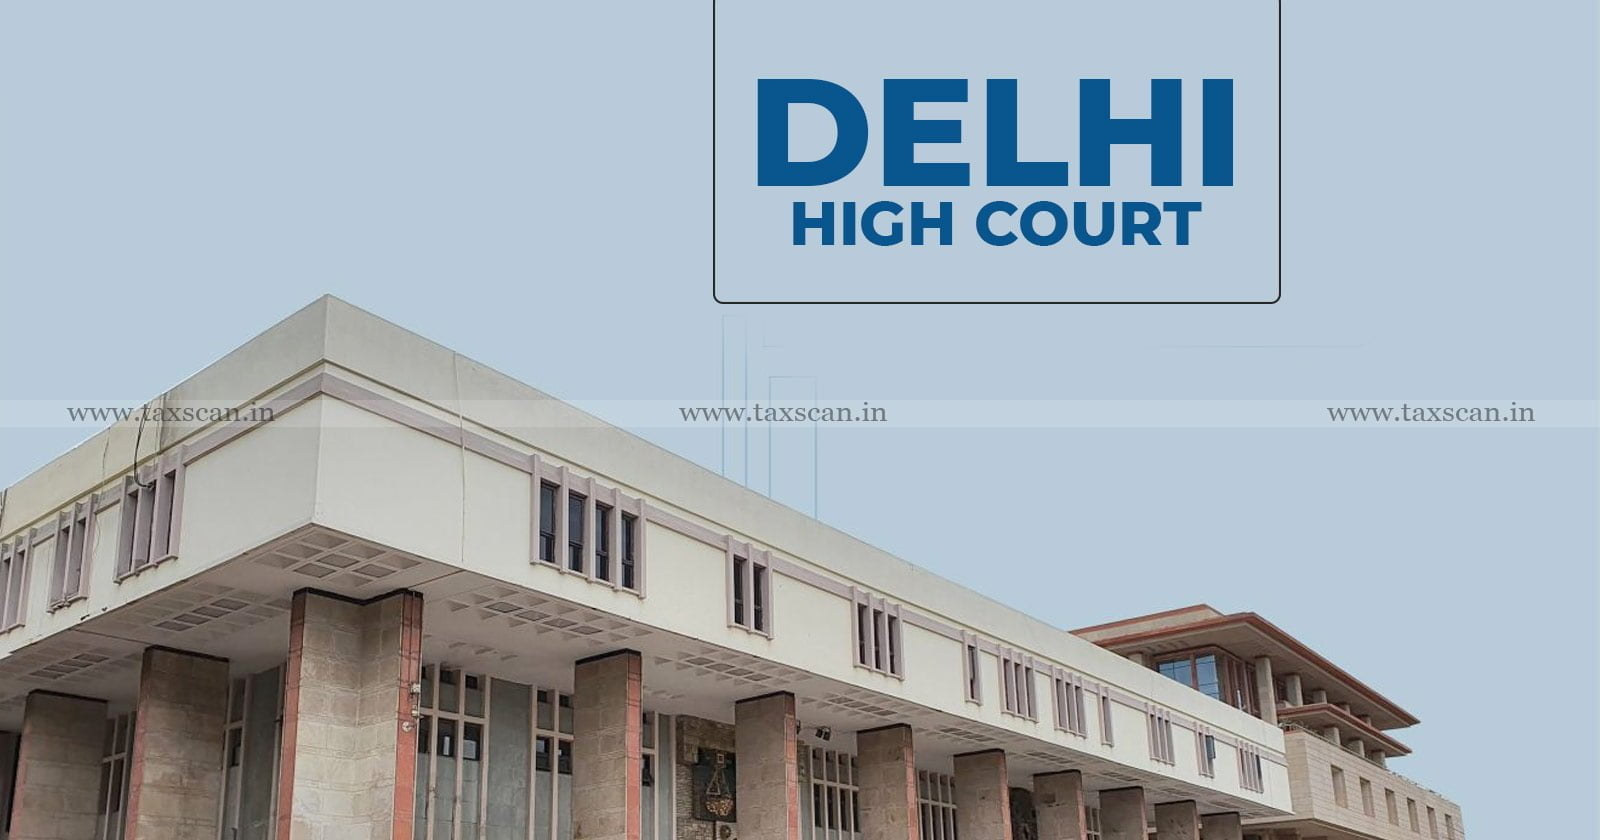 Delhi High Court - delete - addition - assessing officer - invalid - assessment - taxscan